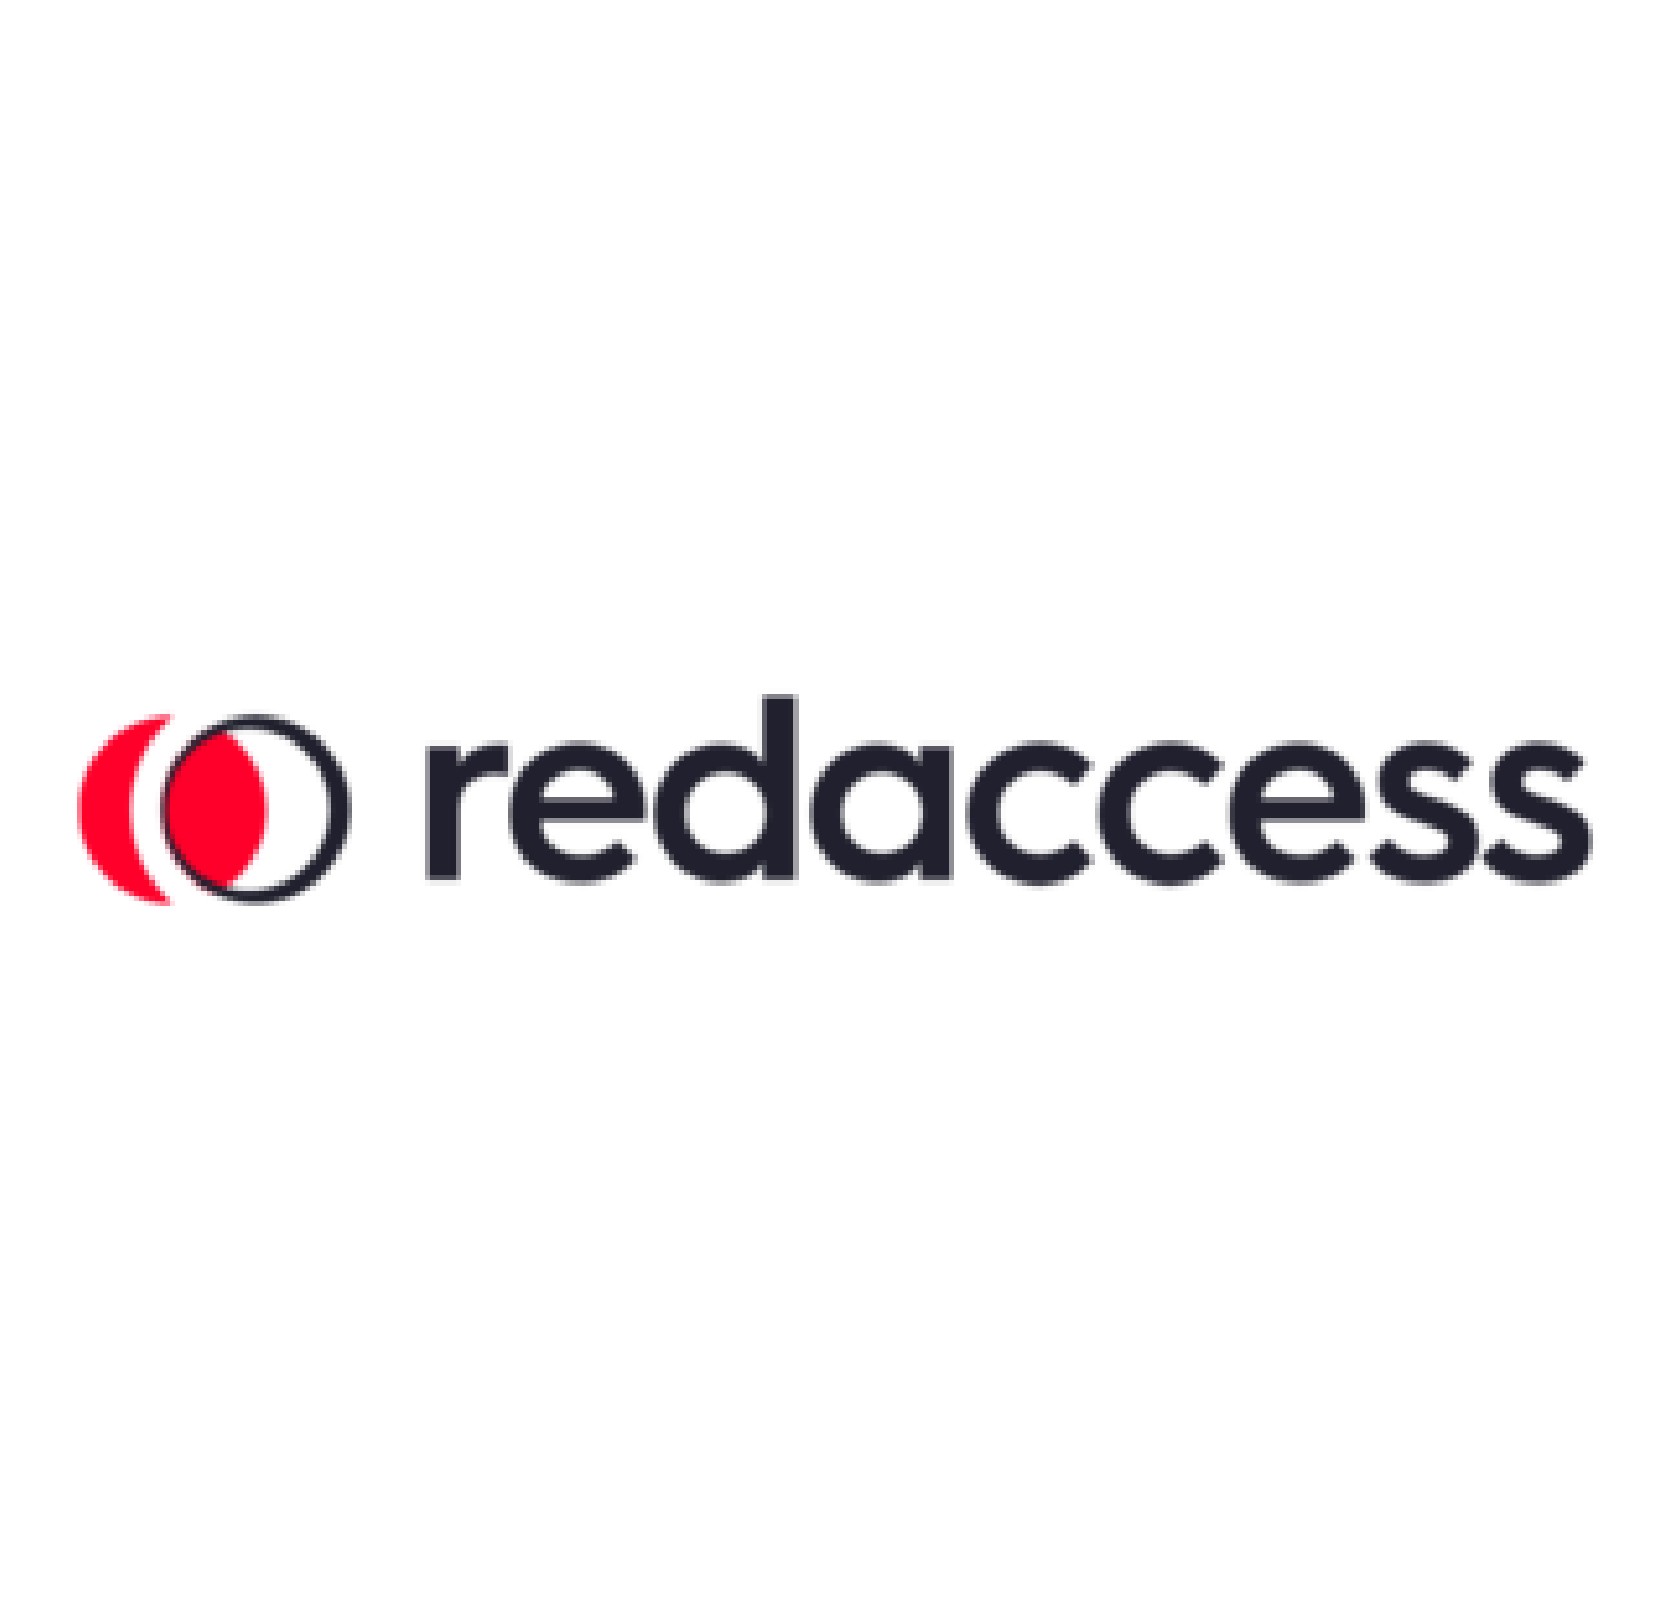 Redaccess logo